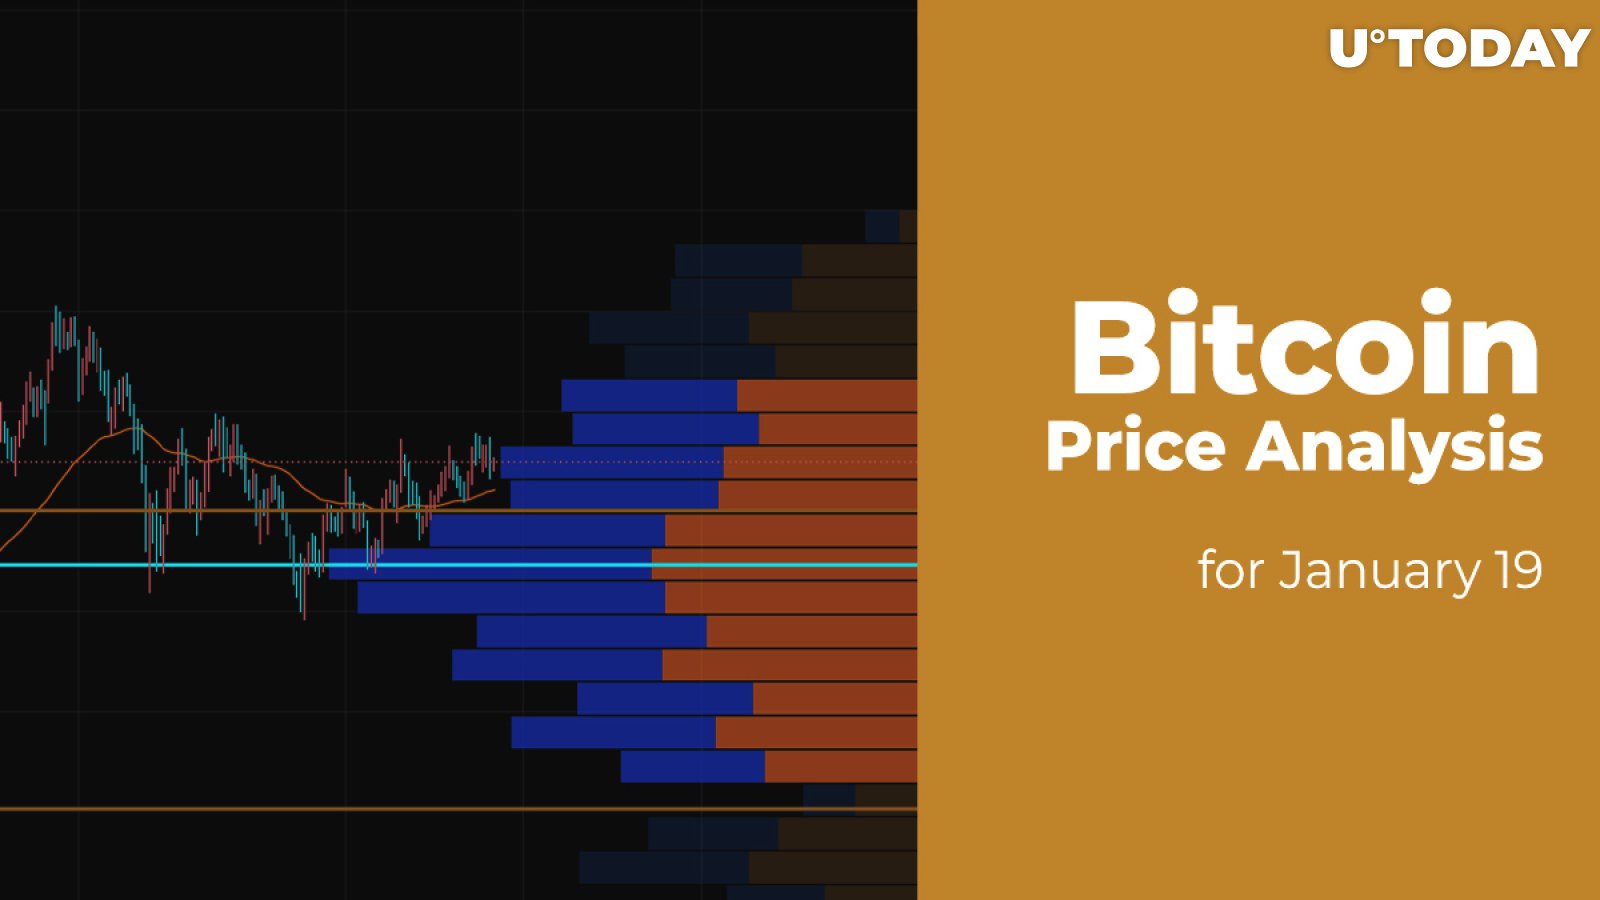 Bitcoin (BTC) Price Analysis for January 19